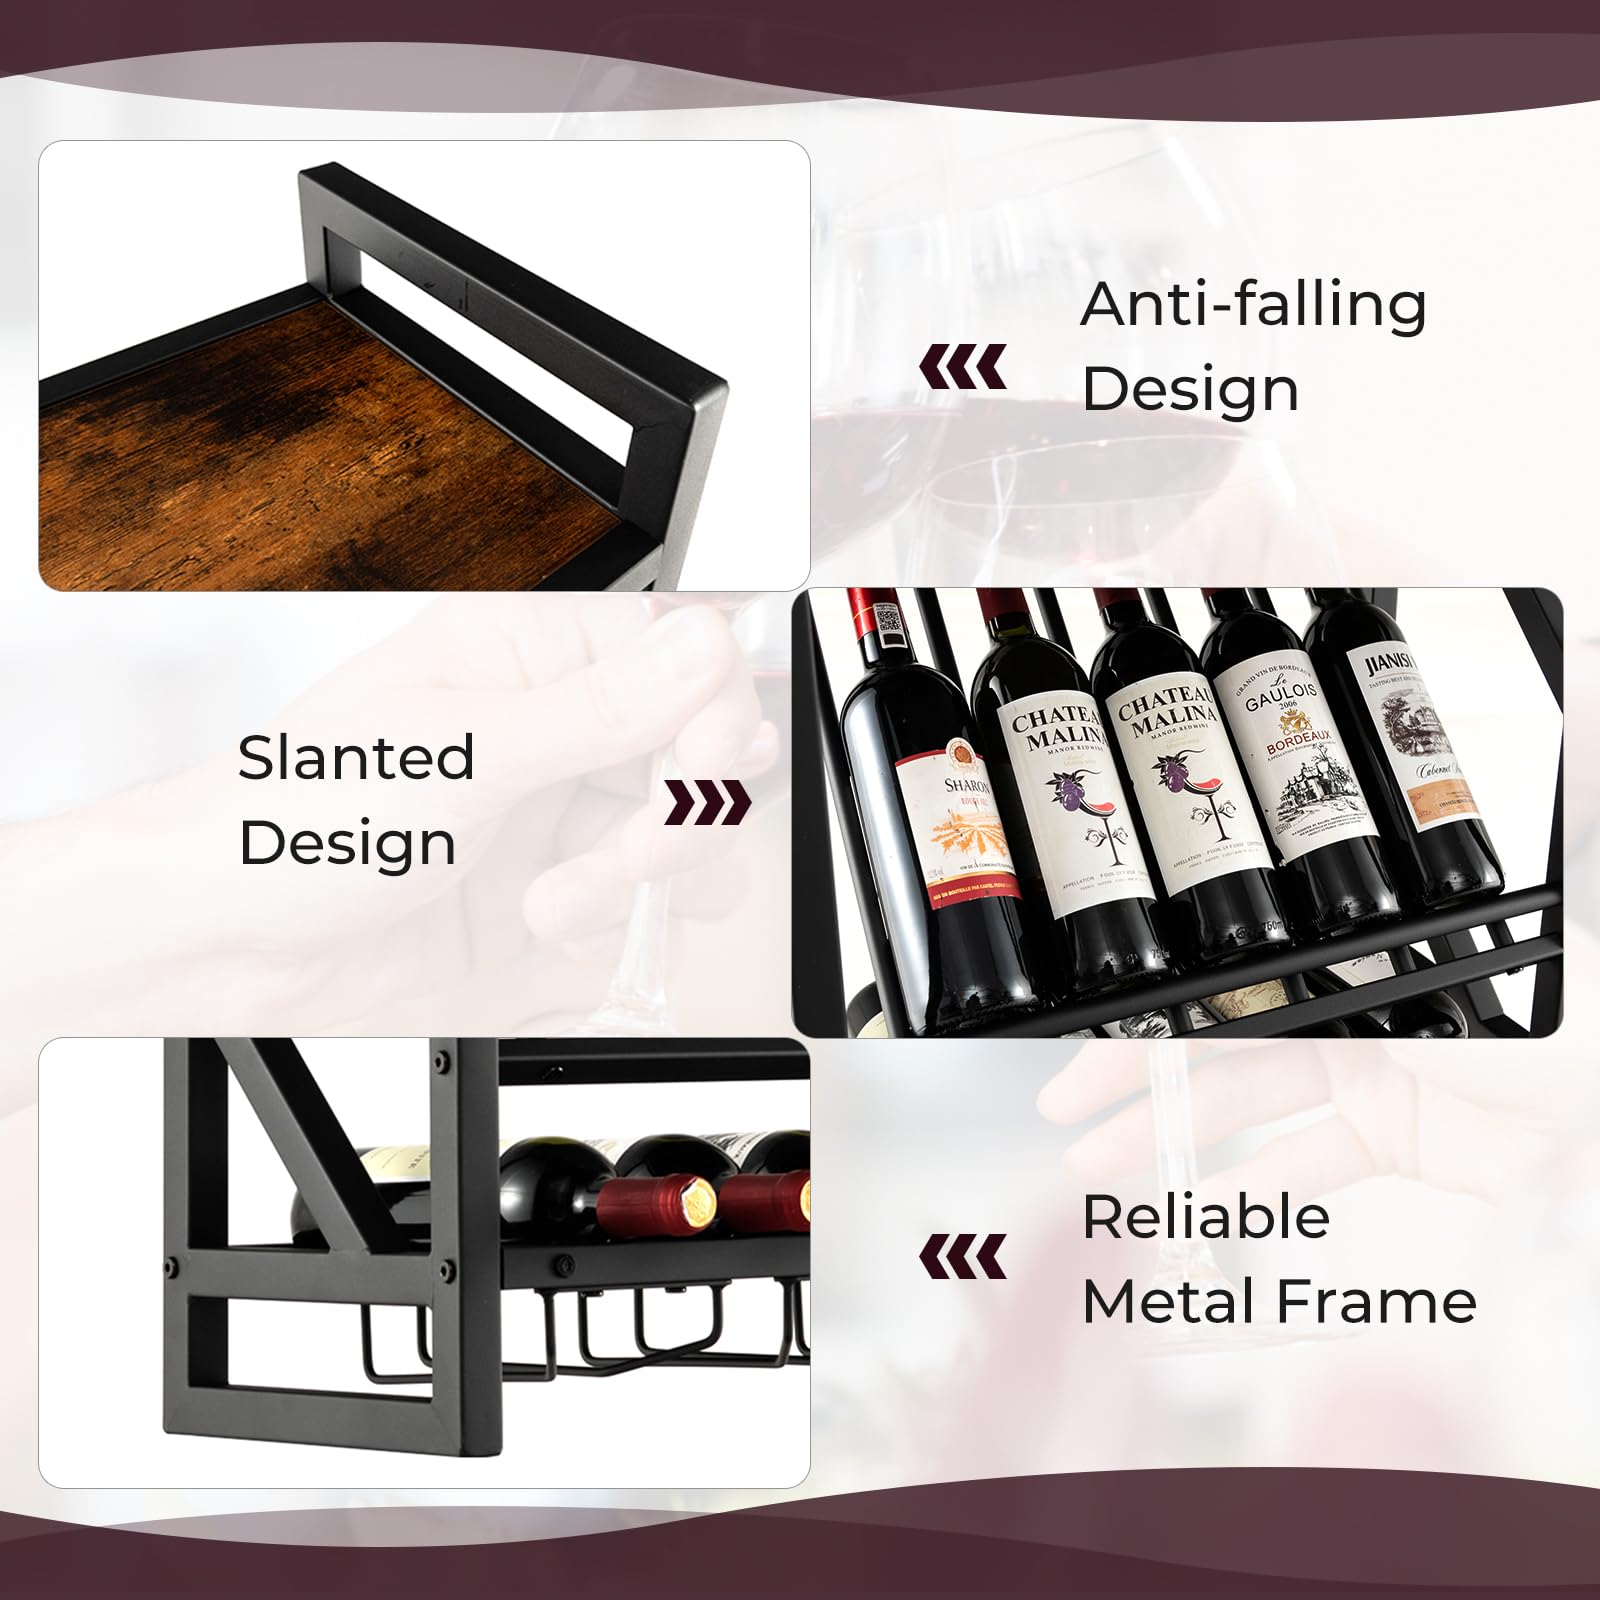 Giantex Wall Mounted Wine Rack with Glass Holder, Industrial 2-Tier 10-Bottle Floating Bar Shelves (Black)